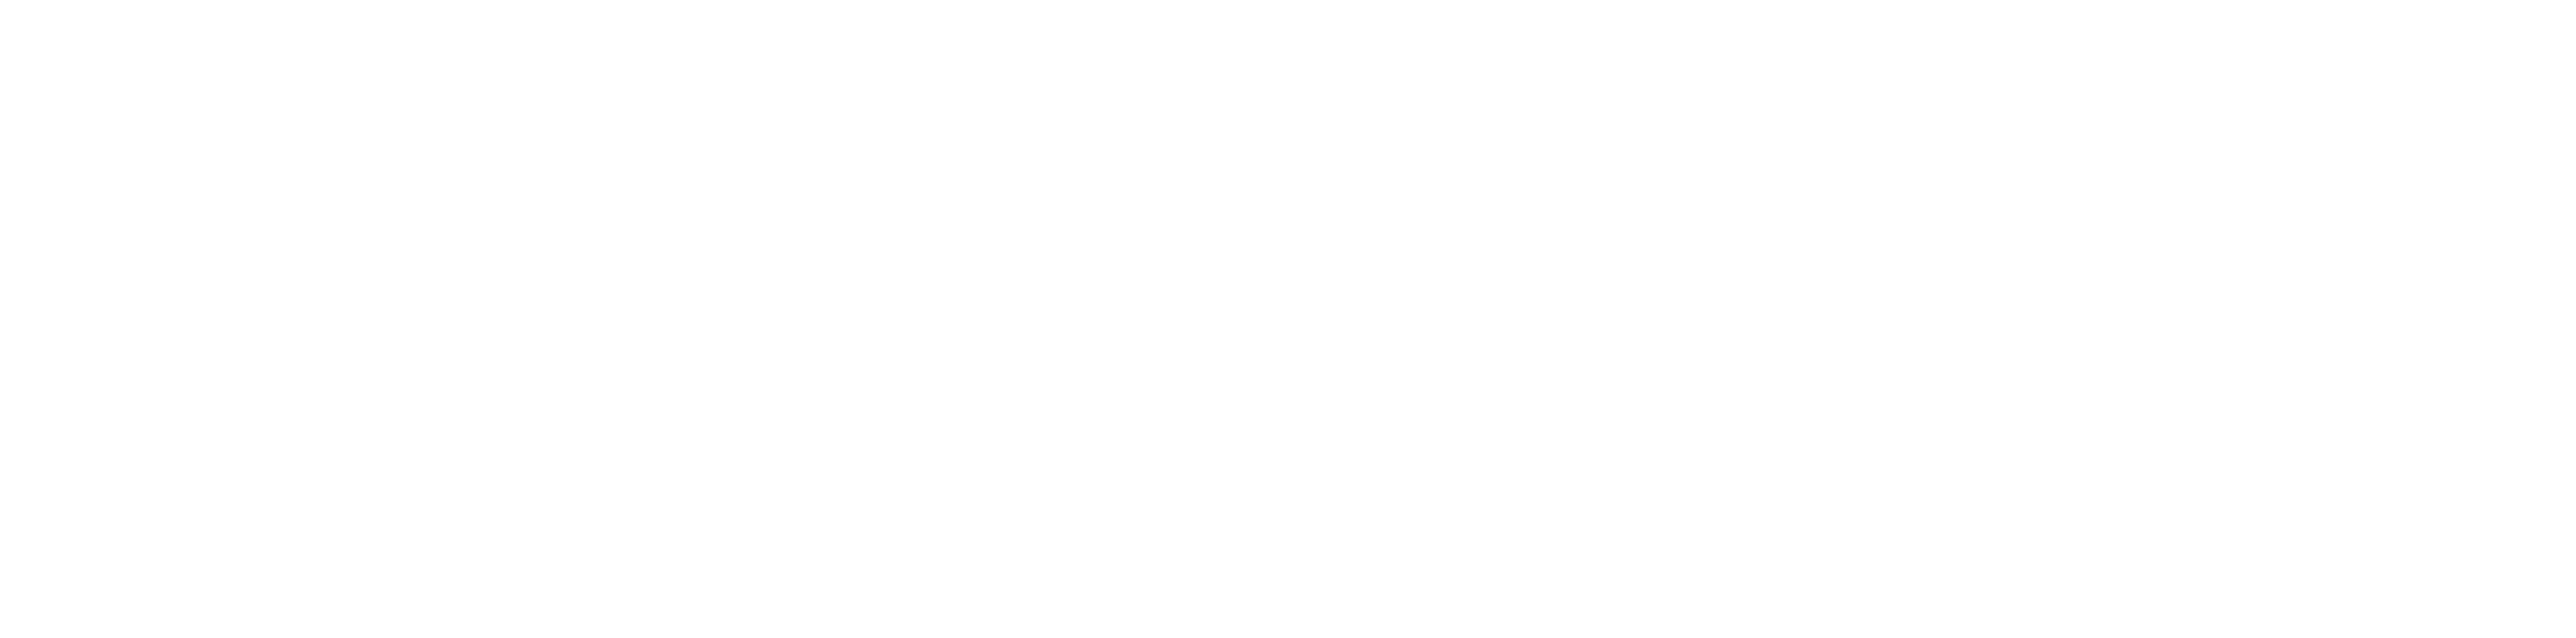 210 Logo - Join Robin - Support San Antonio Charities | Robin Hood 210